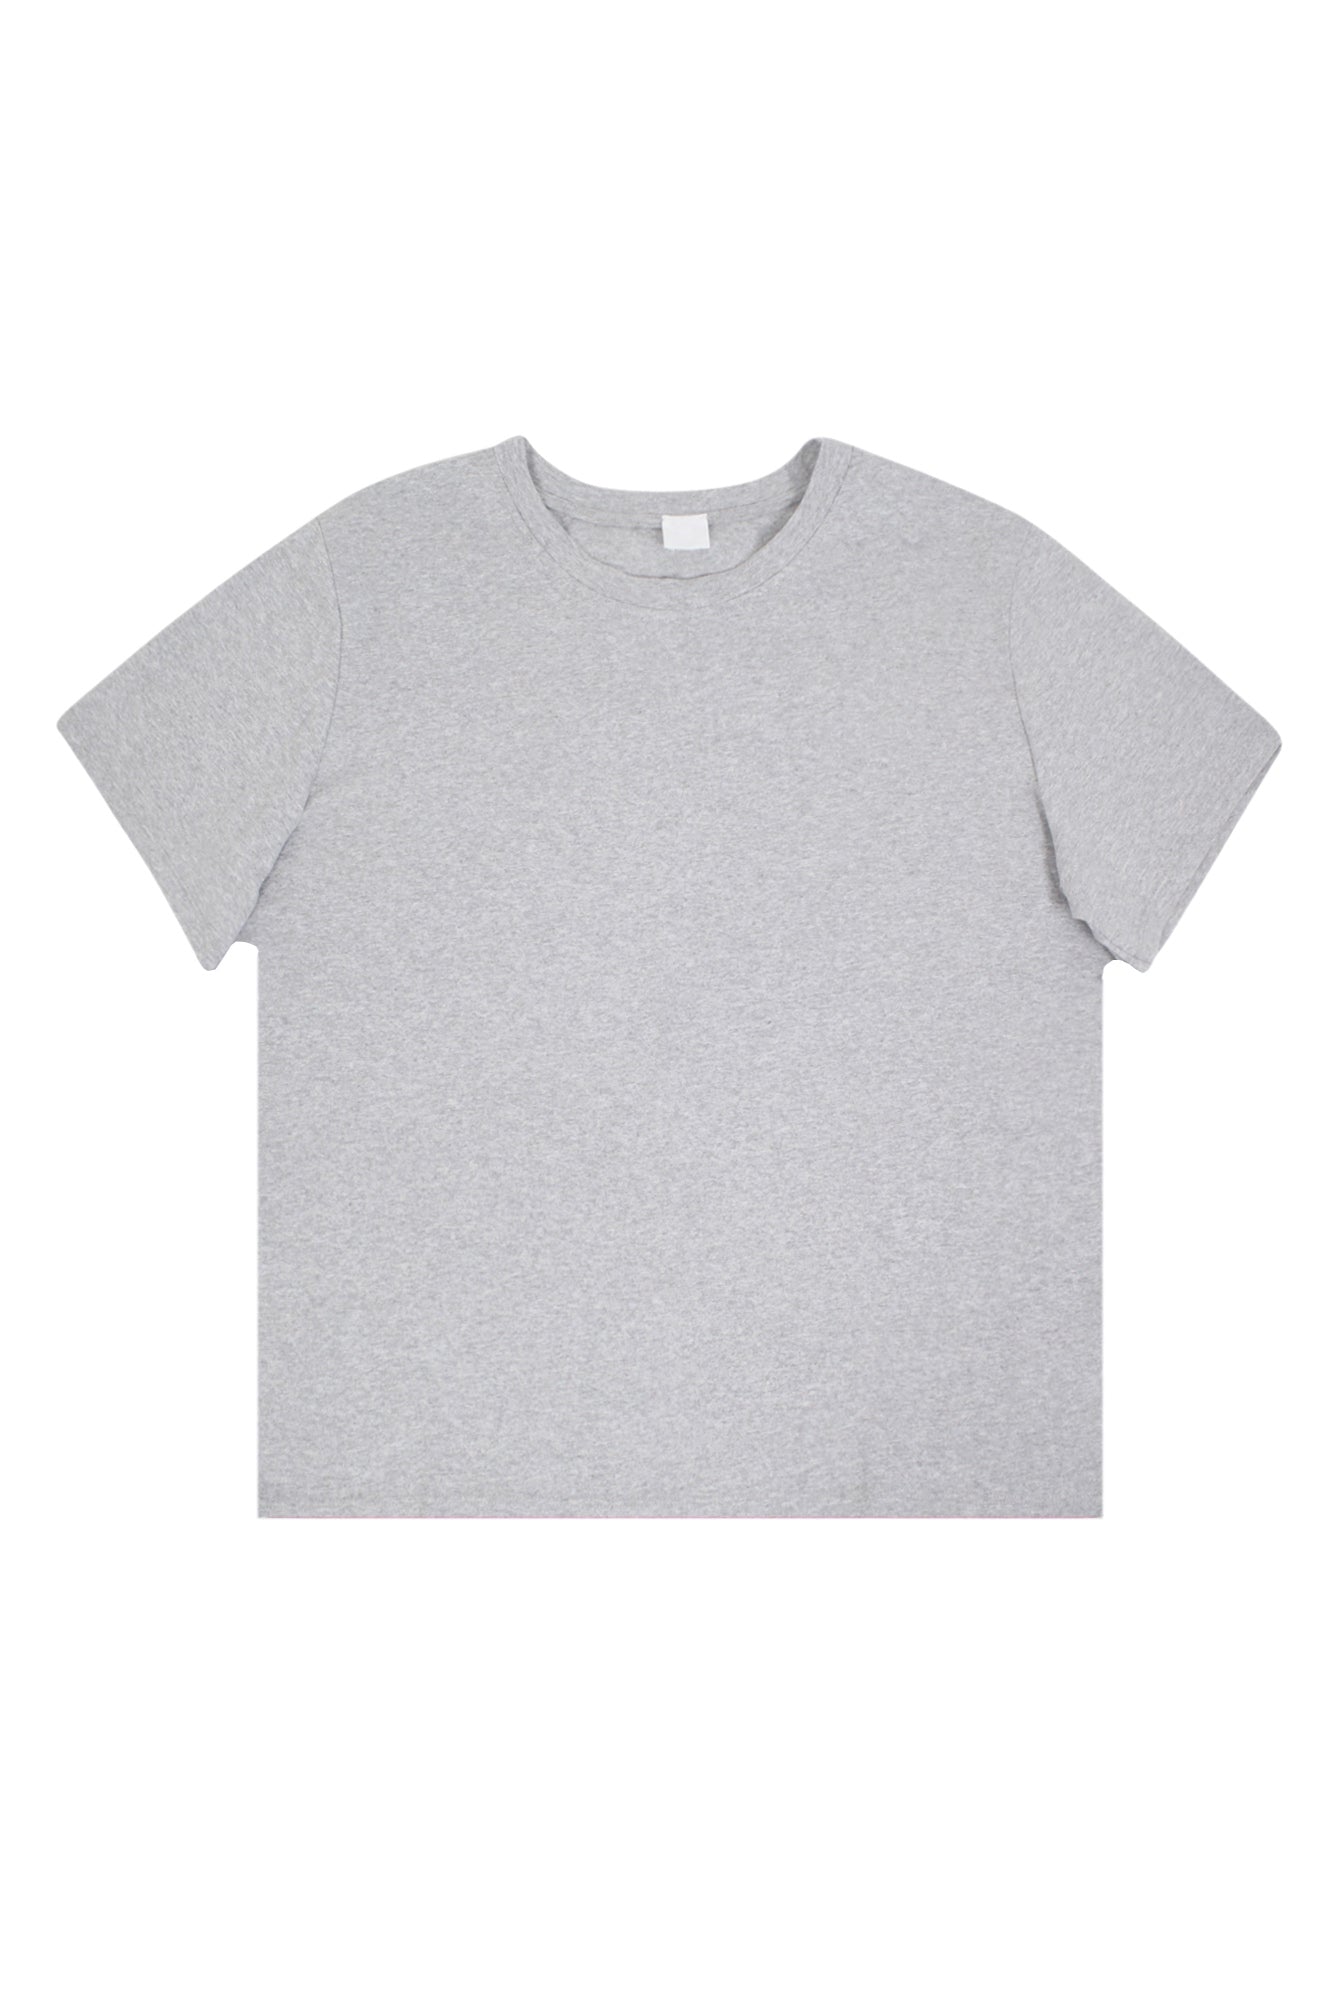 La Femme Blanche - T-shirt - 431583 - Grigio